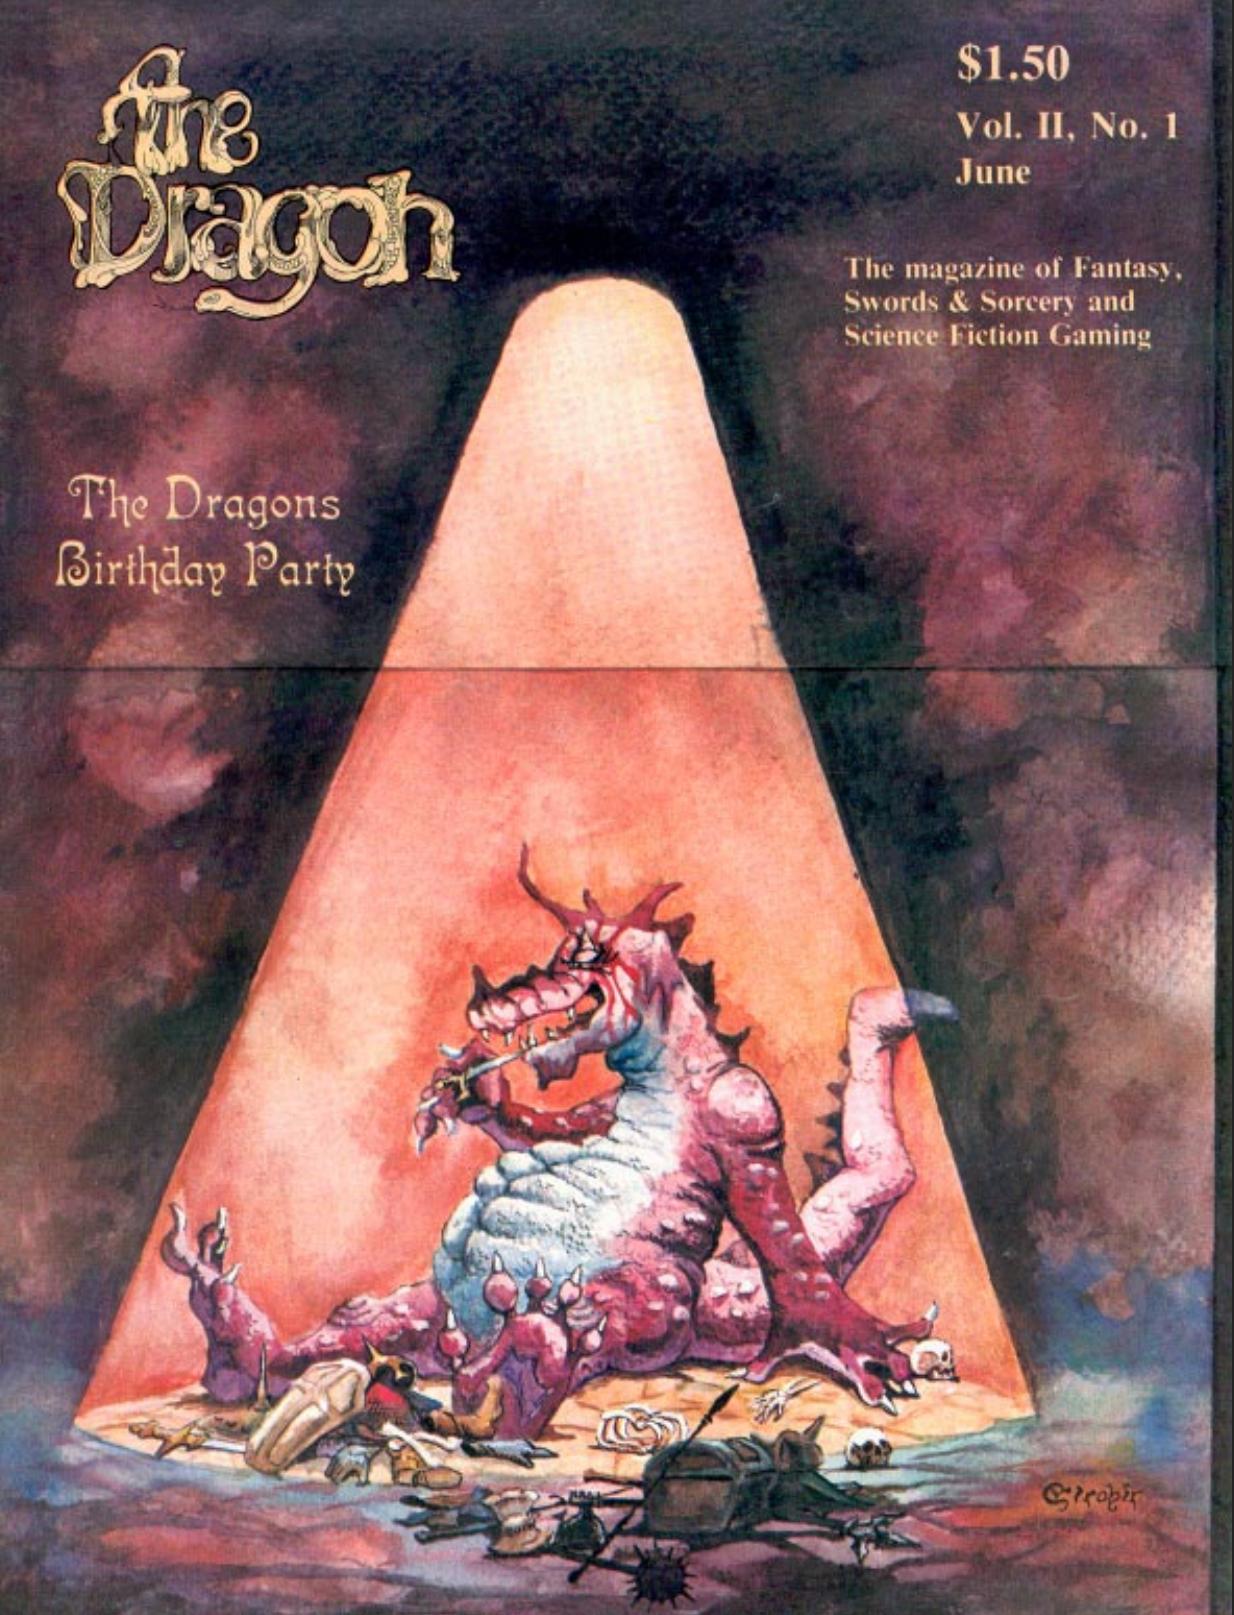 The Dragon Magazine #7